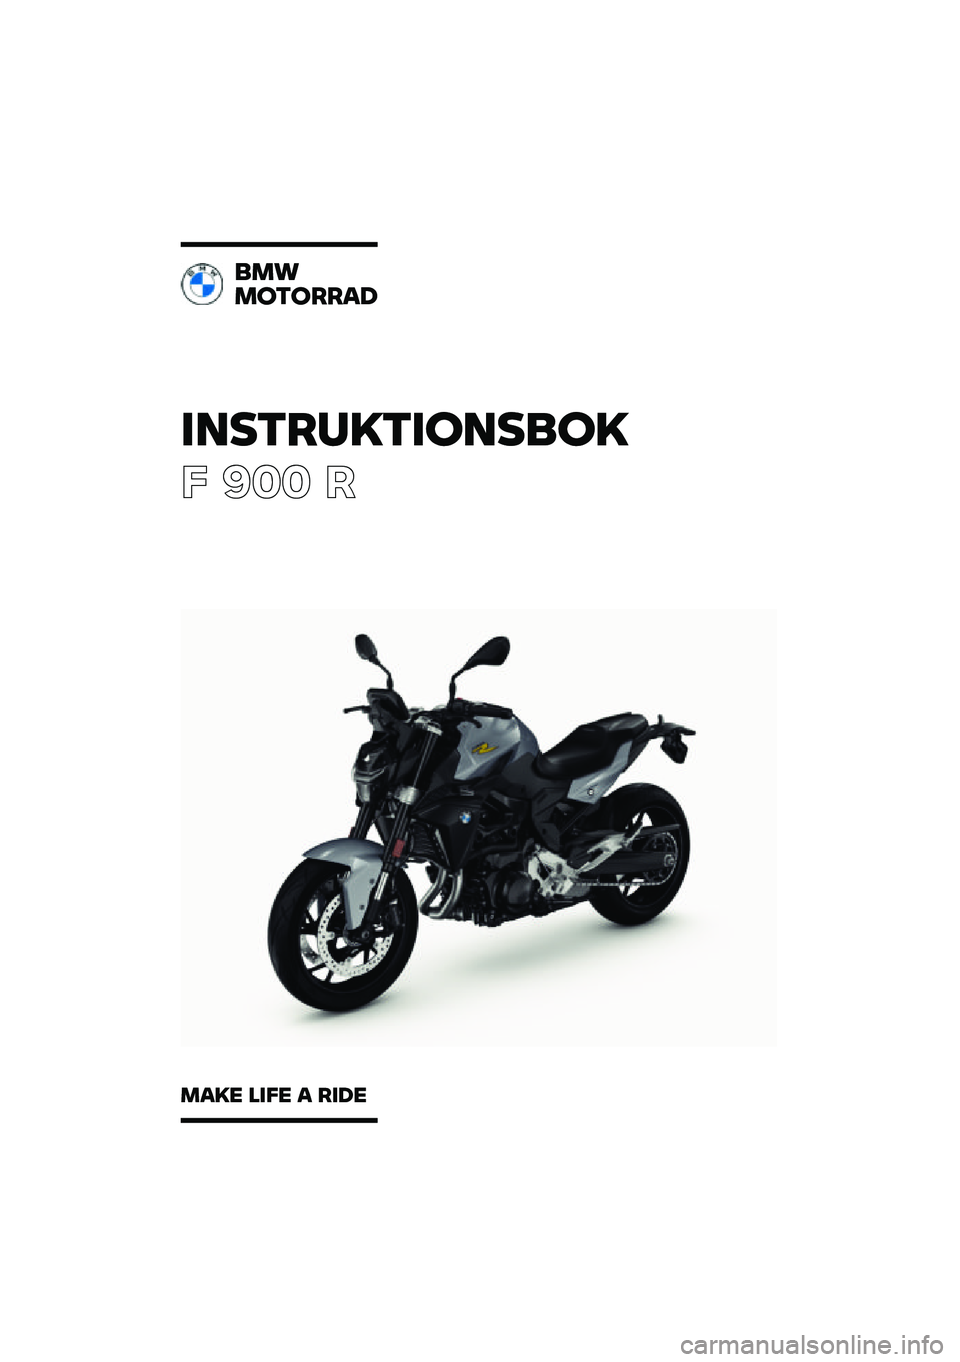 BMW MOTORRAD F 900 R 2021  Instruktionsbok (in Swedish) �������\b���	���
�	�\b
� ��� �
�
��\f
��	��	���
�
��
�\b� ���� �
 ���� 